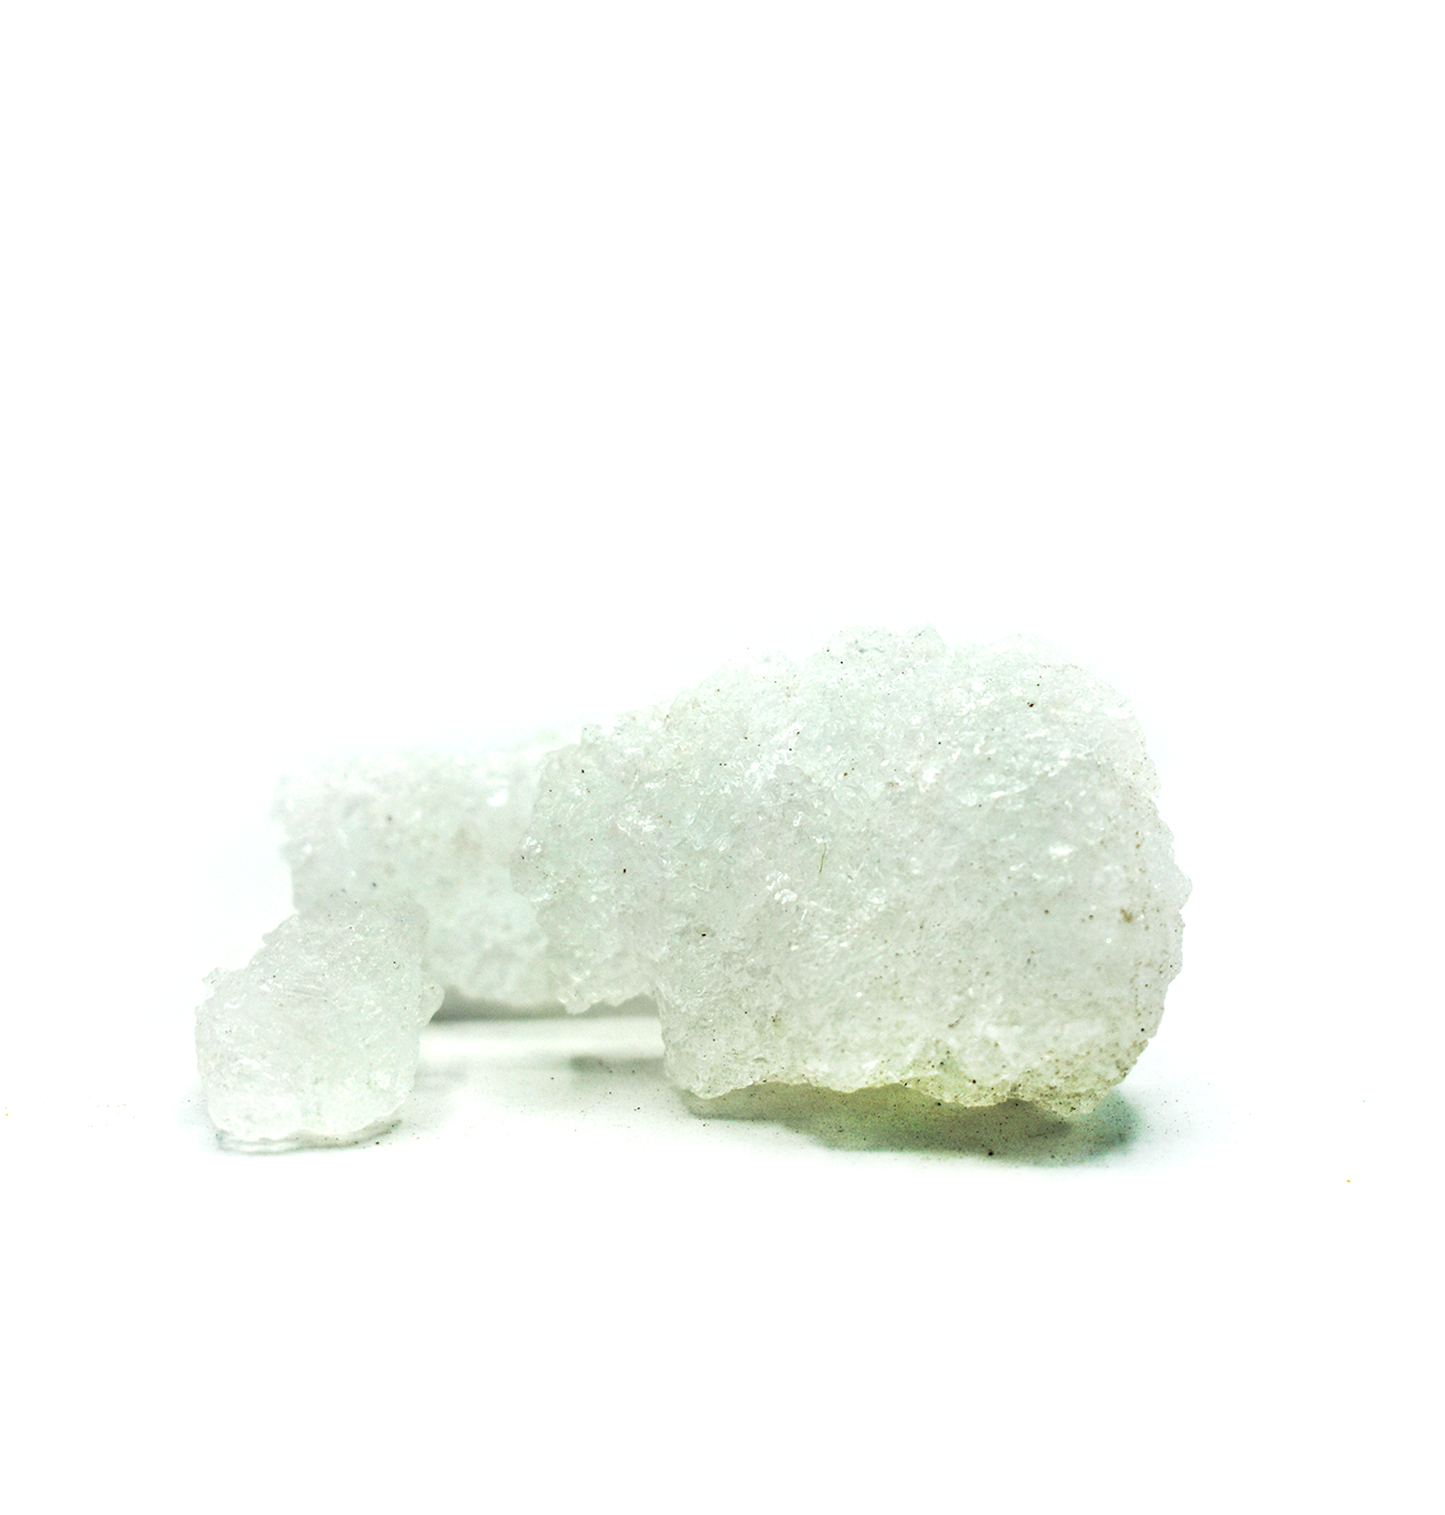 MANG XIAO - 芒硝 - Sodium Sulfate - 100g